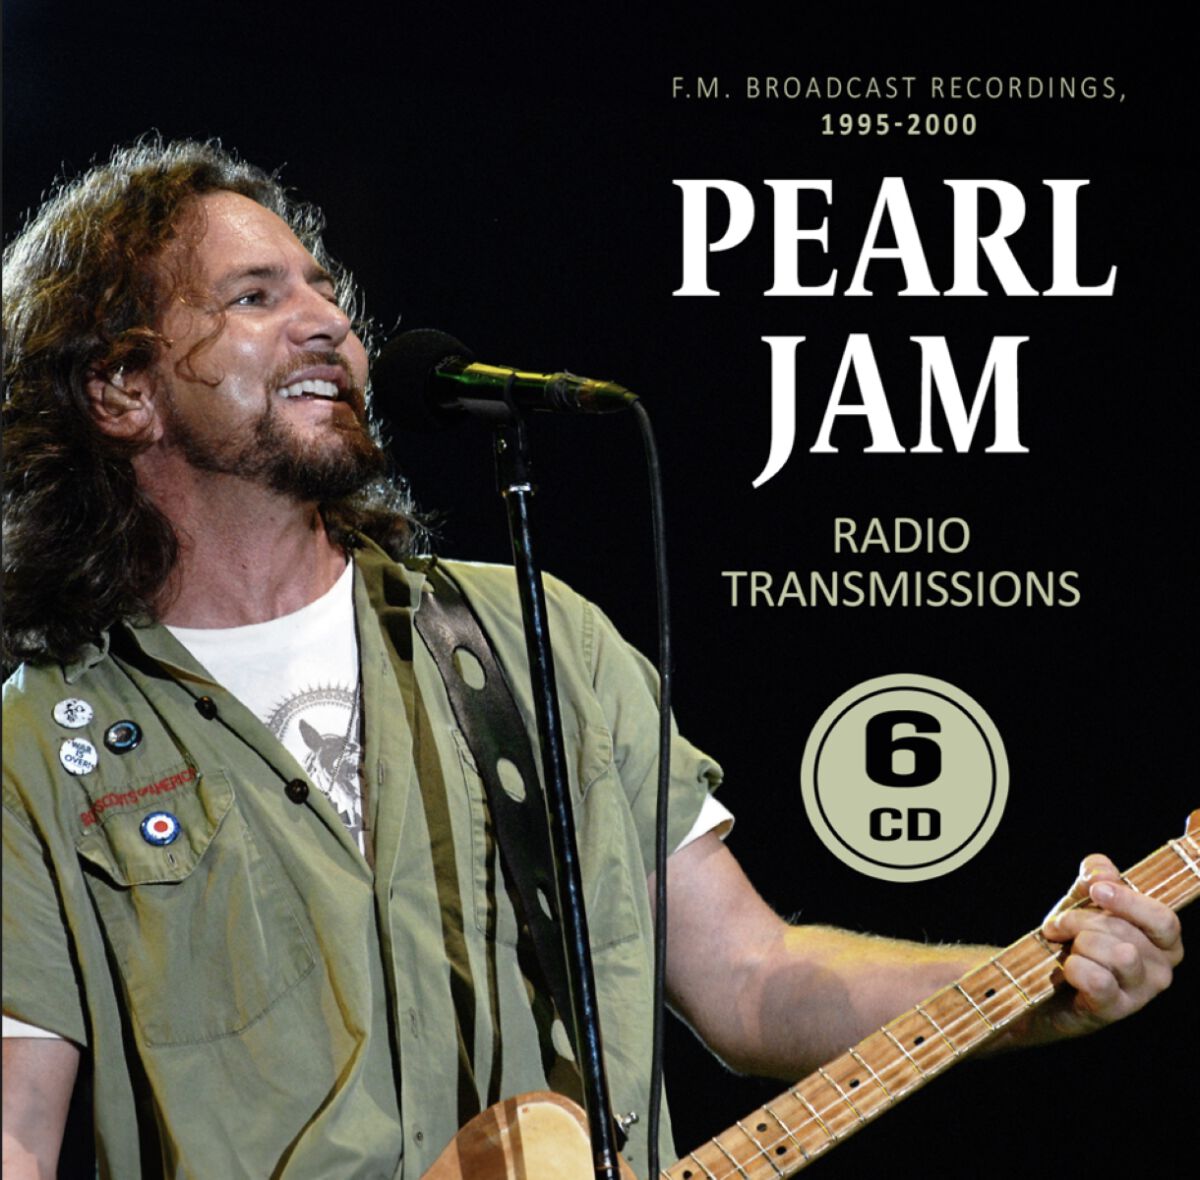 Pearl Jam Radio Transmissions CD multicolor